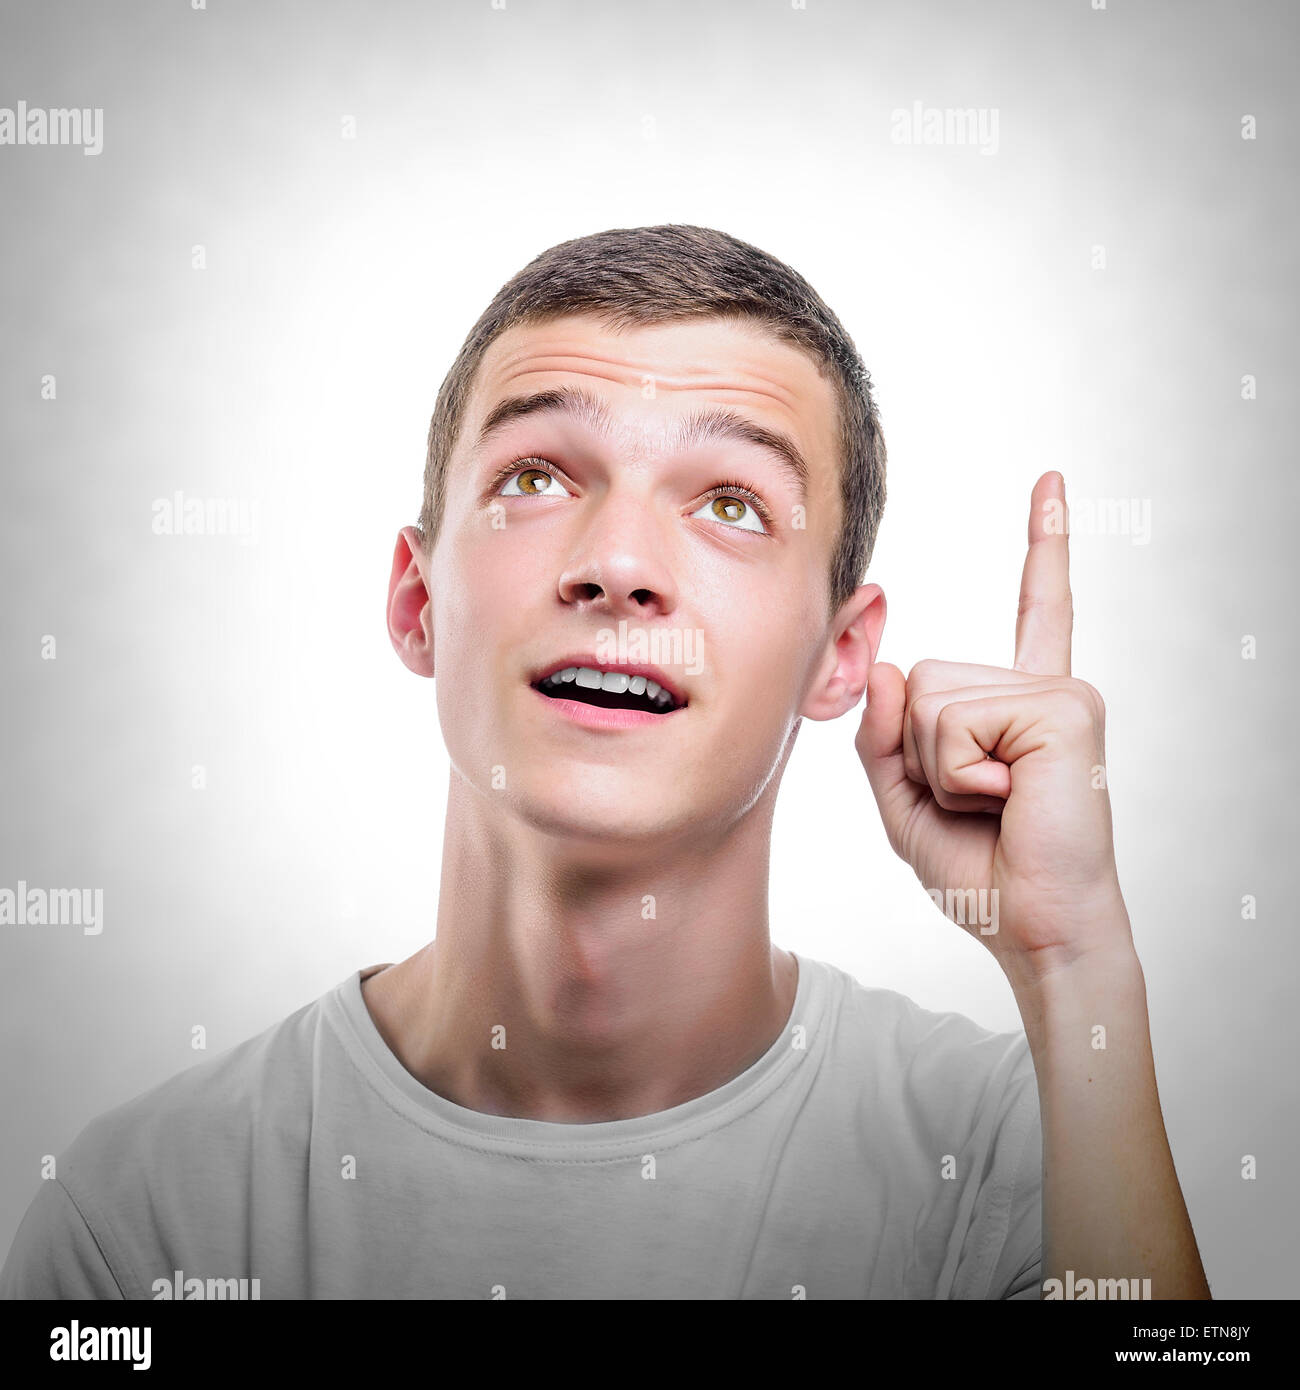 Young man showing upwards index finger. Stock Photo